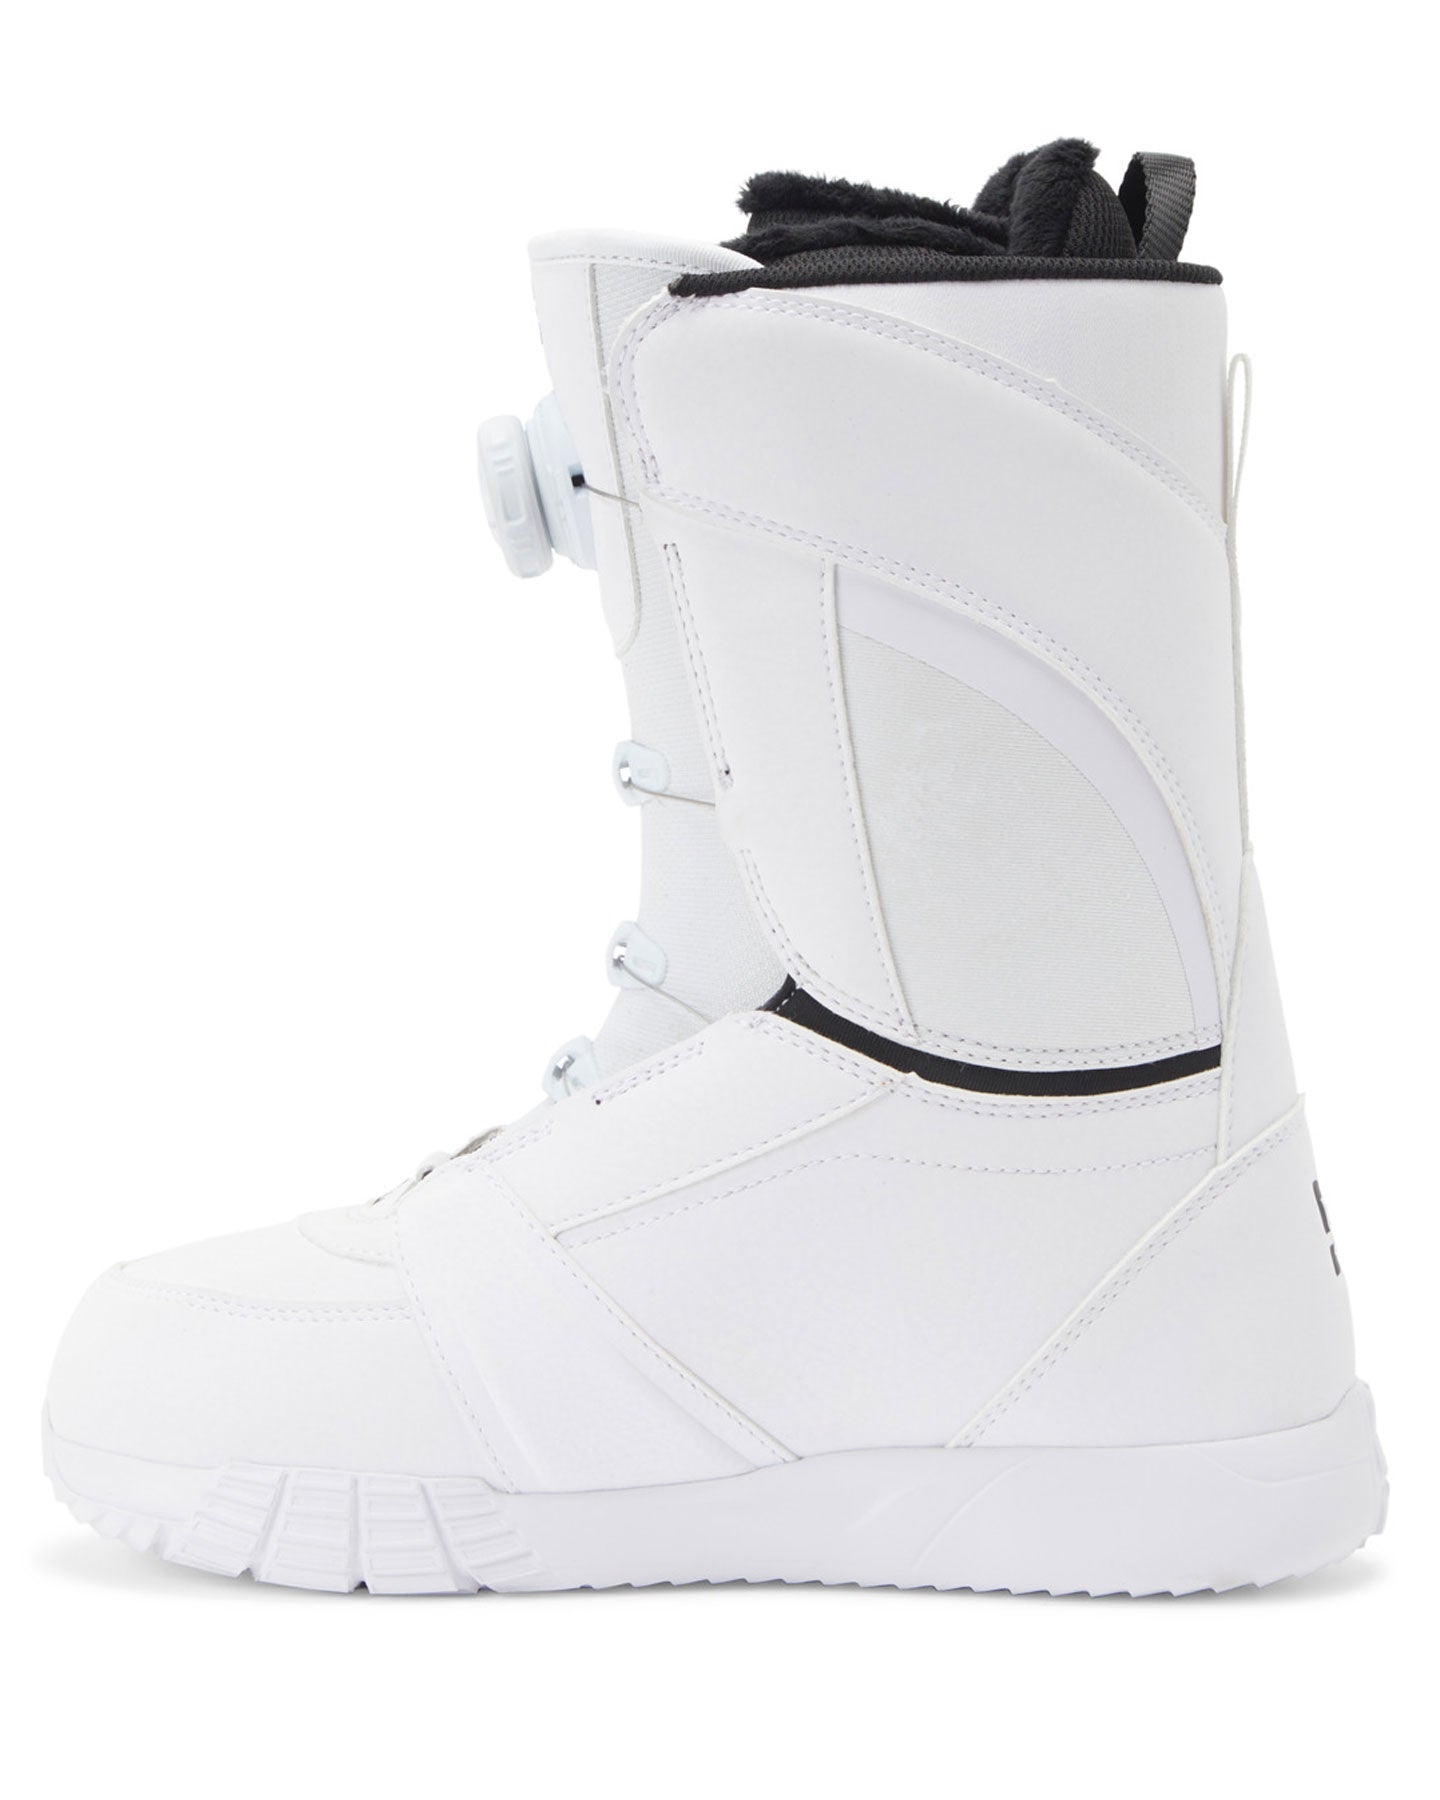 DC Women's Lotus BOA® Snowboard Boots - White/White Women's Snowboard Boots - Trojan Wake Ski Snow